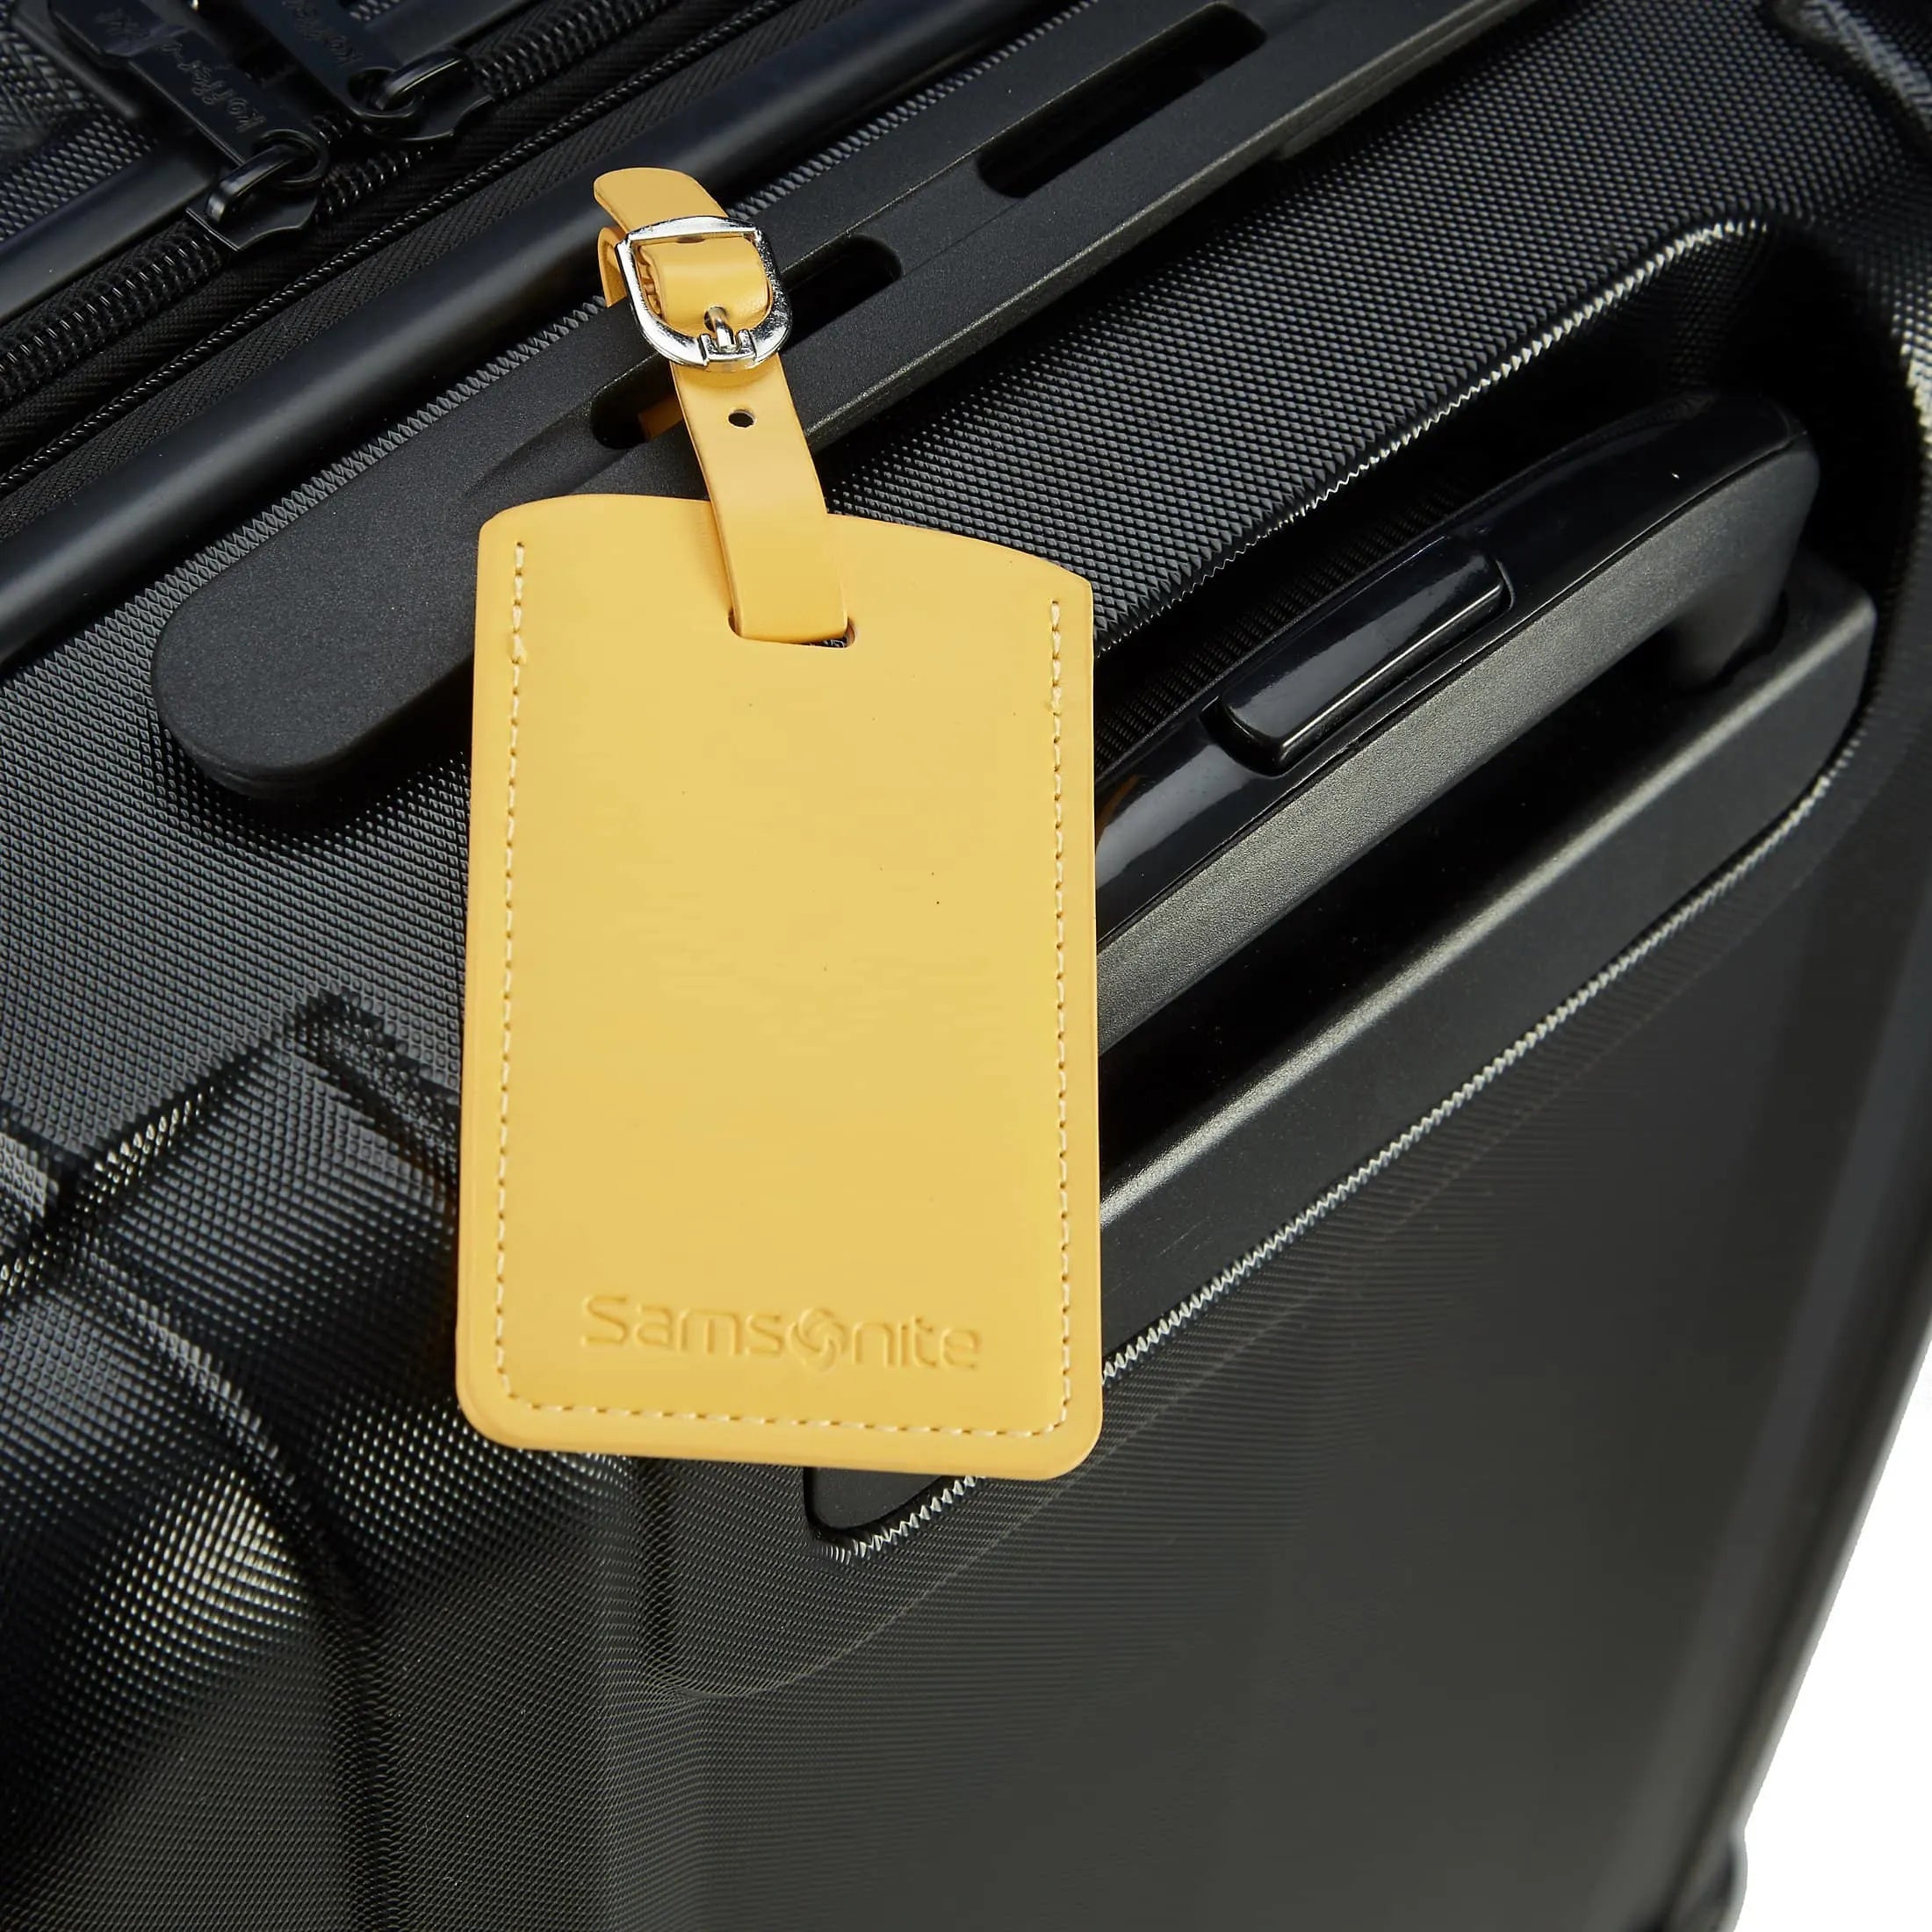 Samsonite Travel Accessories luggage tag set - red